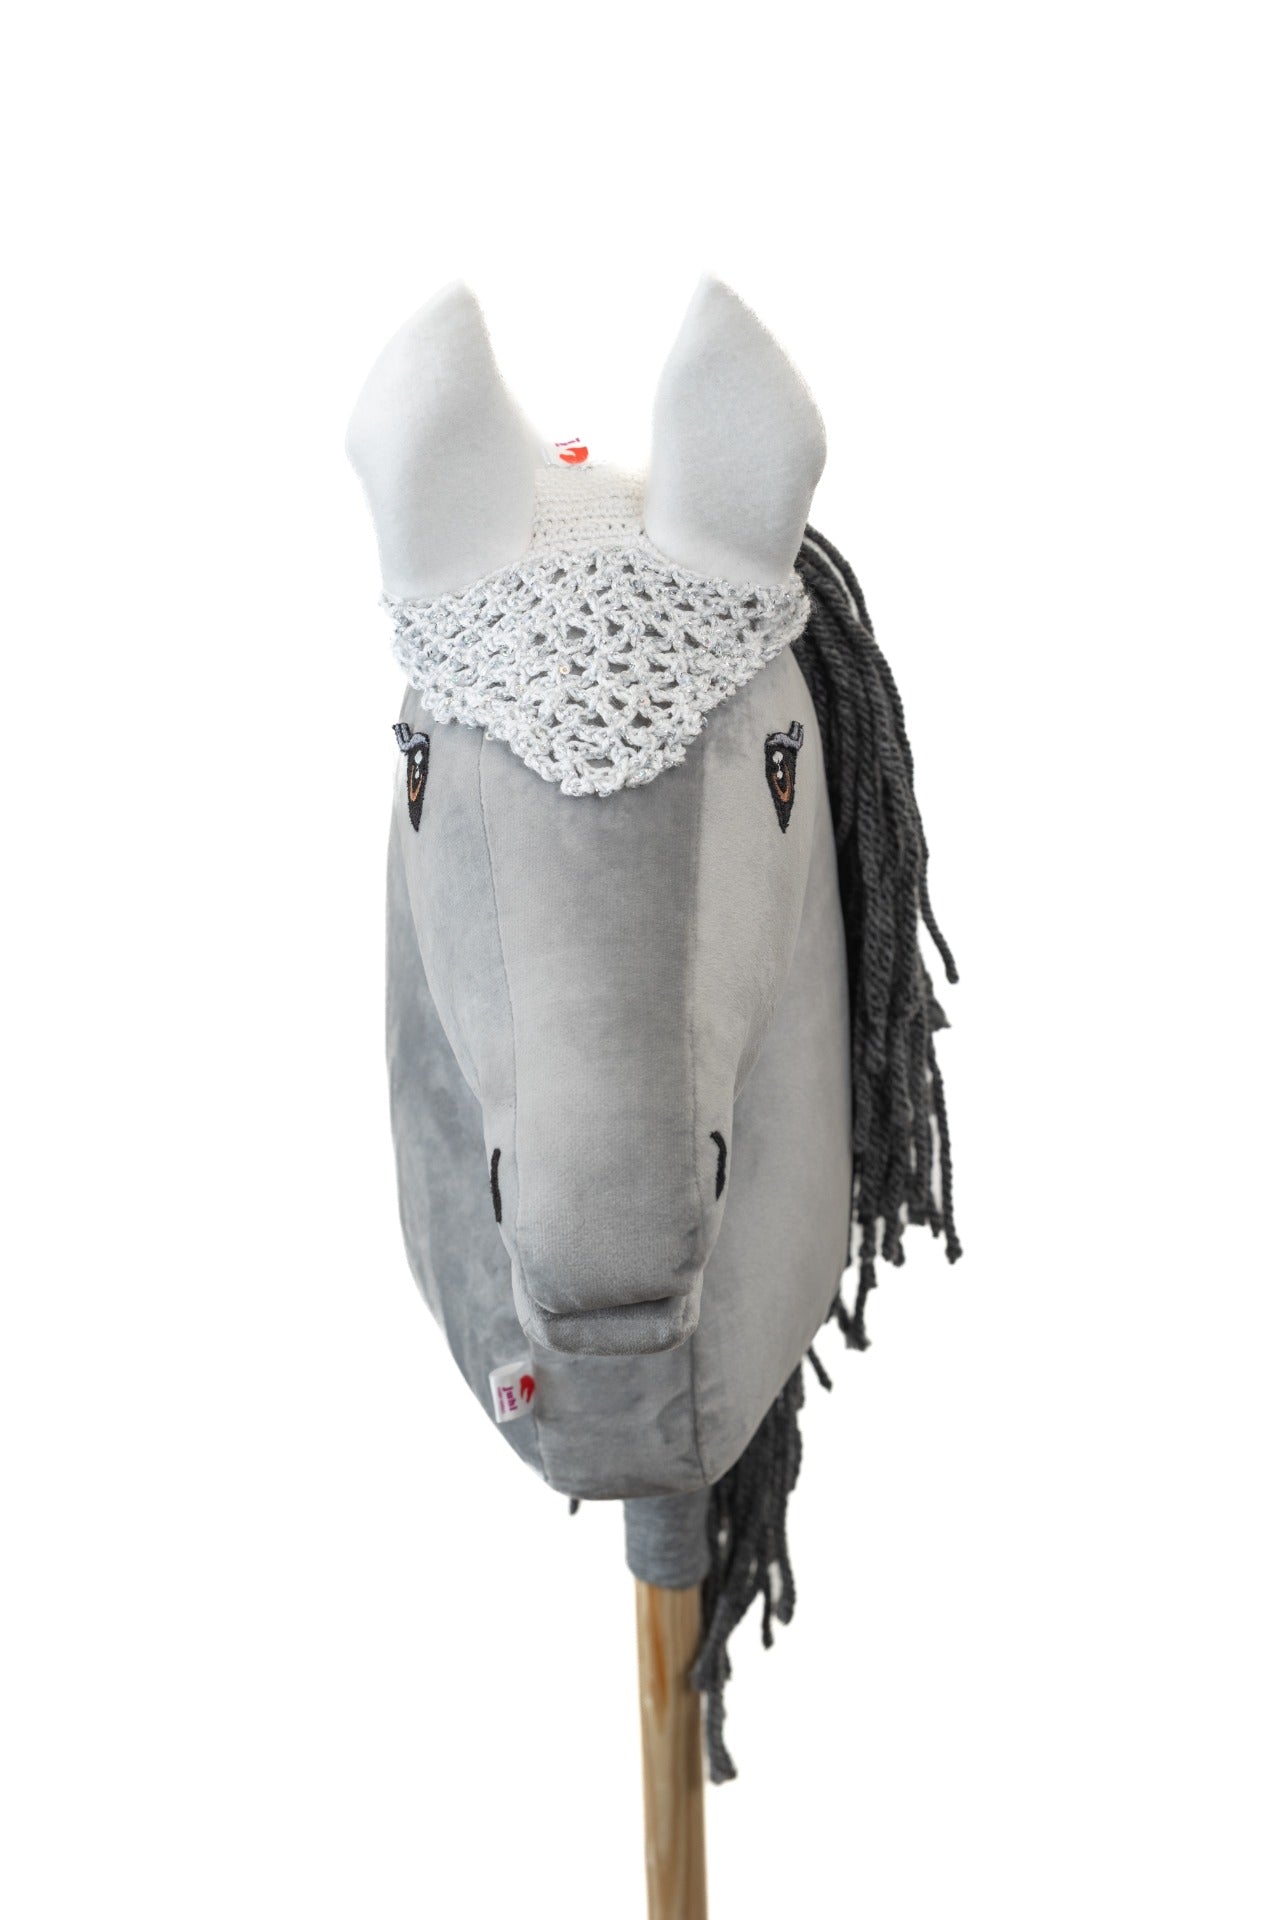 Ear net crocheted - White silver - Adult horse